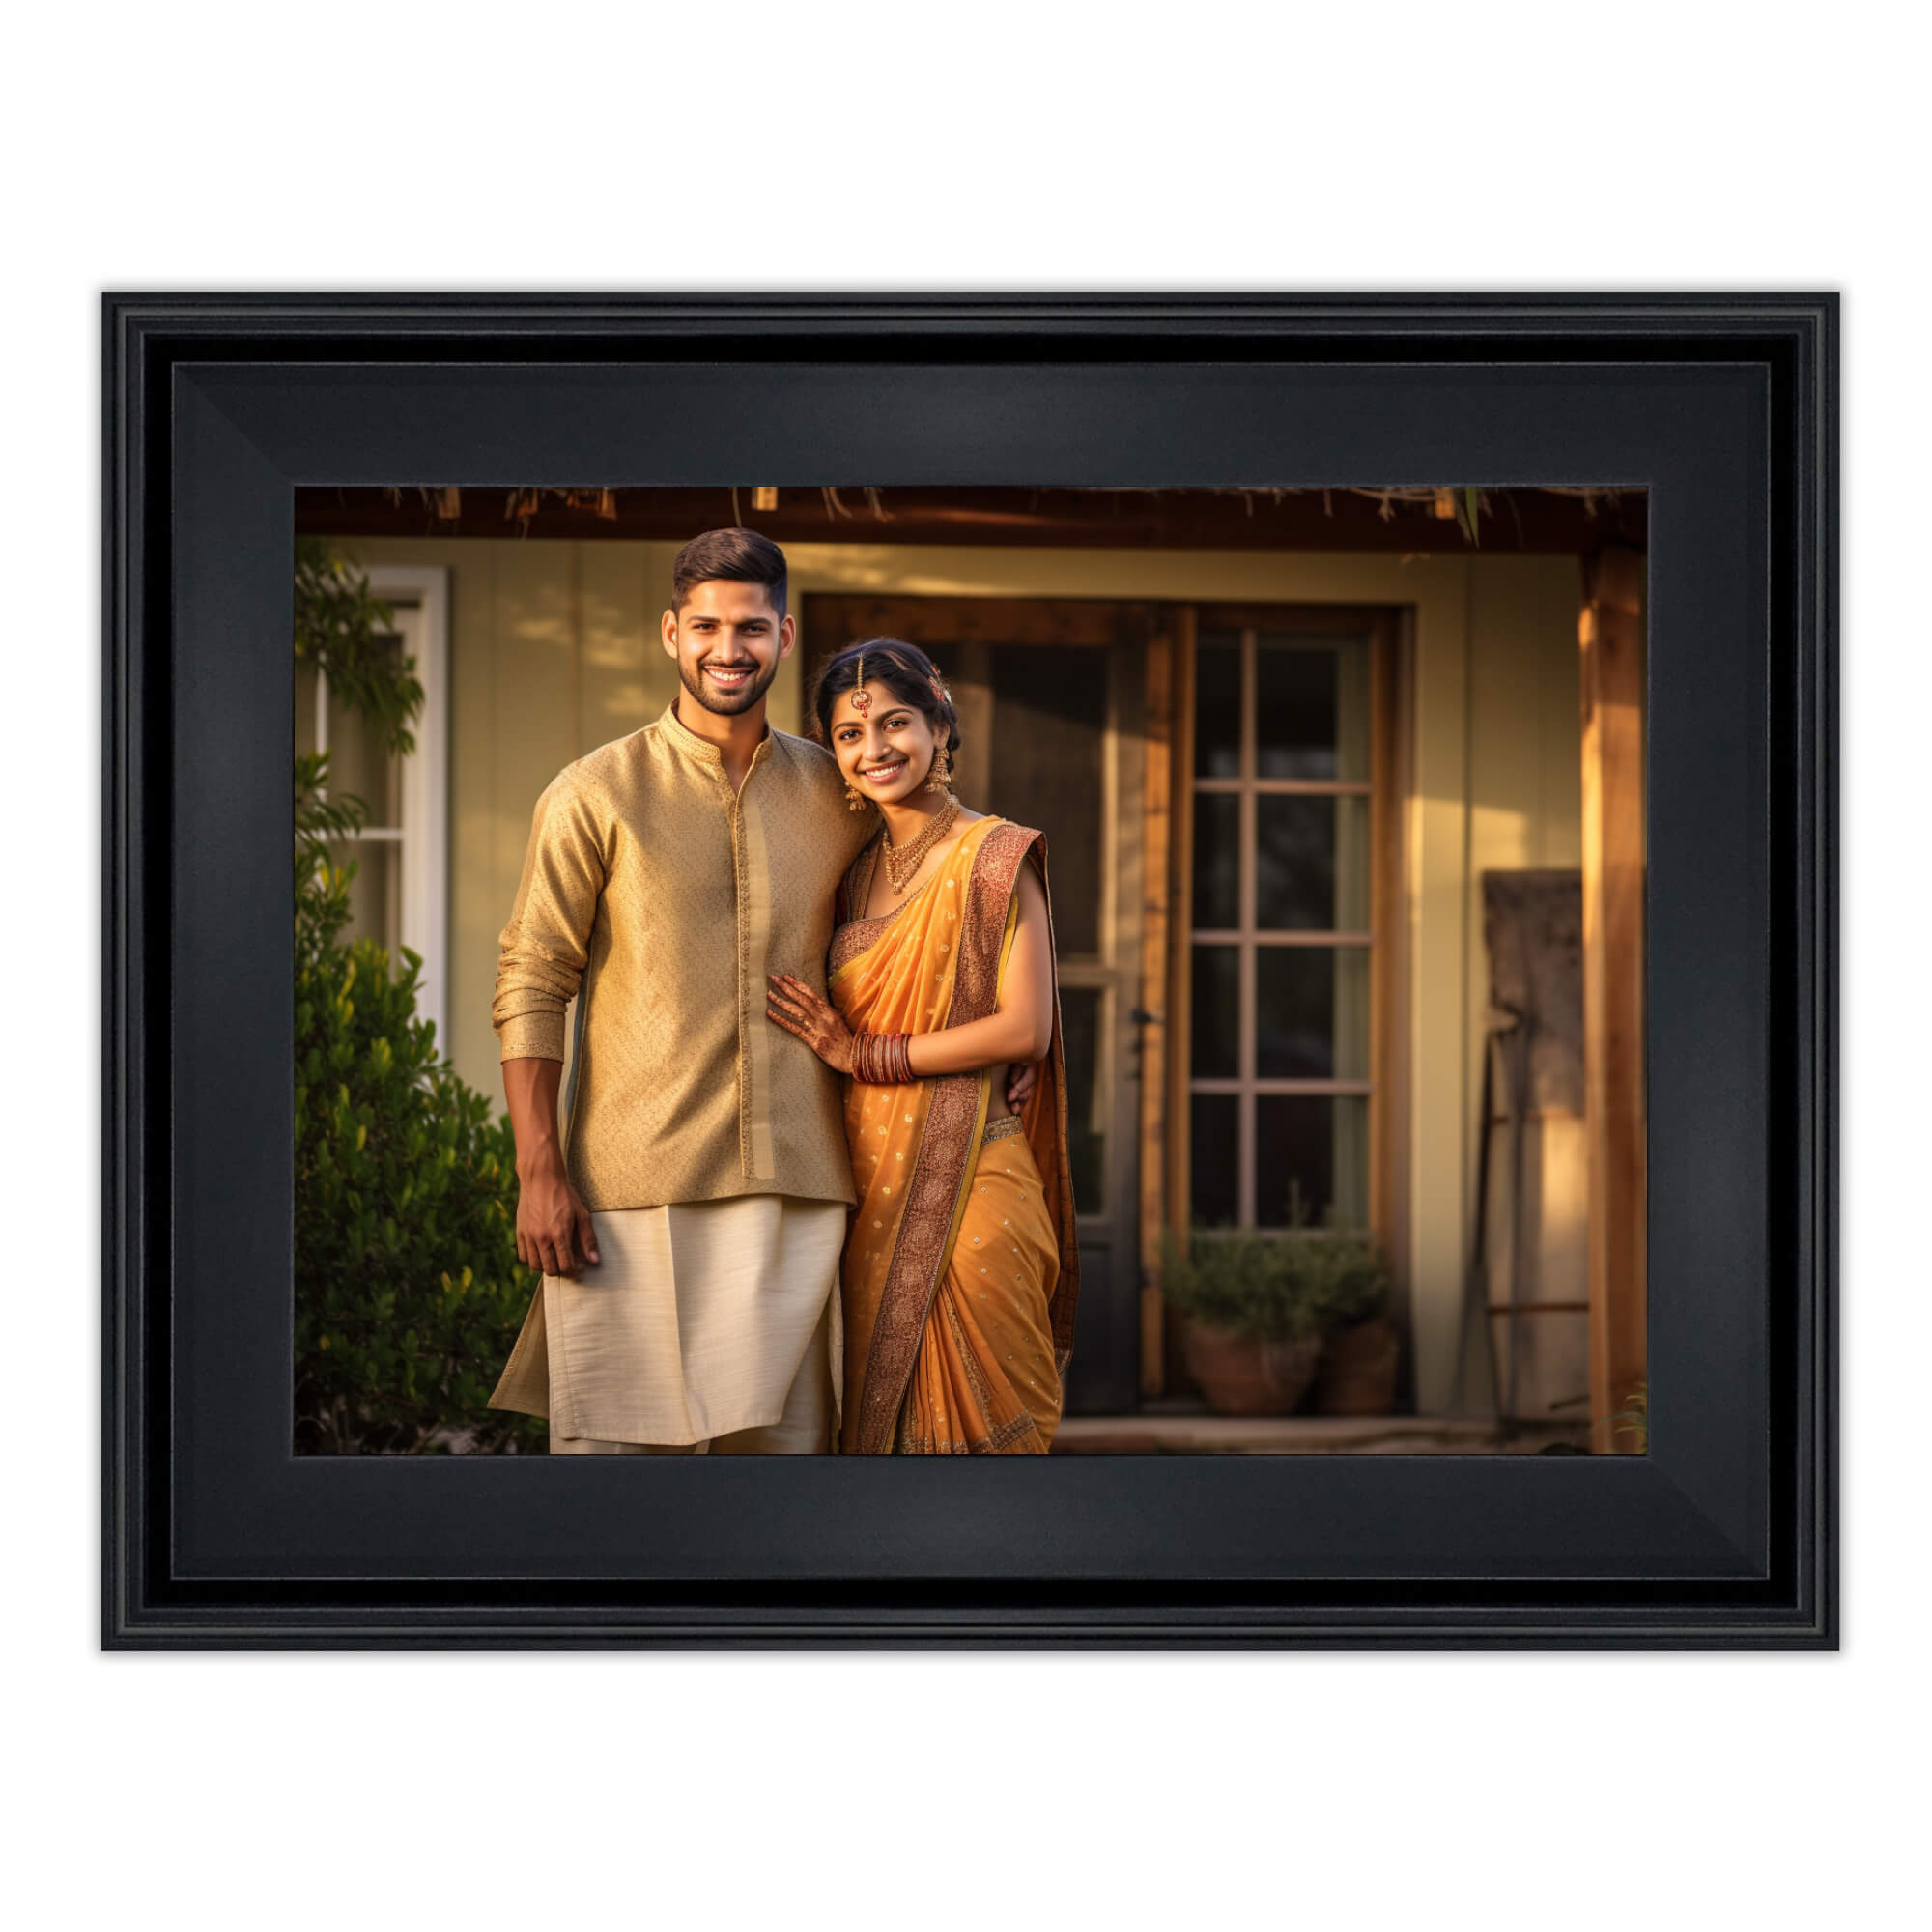 Framed Prints - Create Custom Photo Frams Online India - Frame Prints